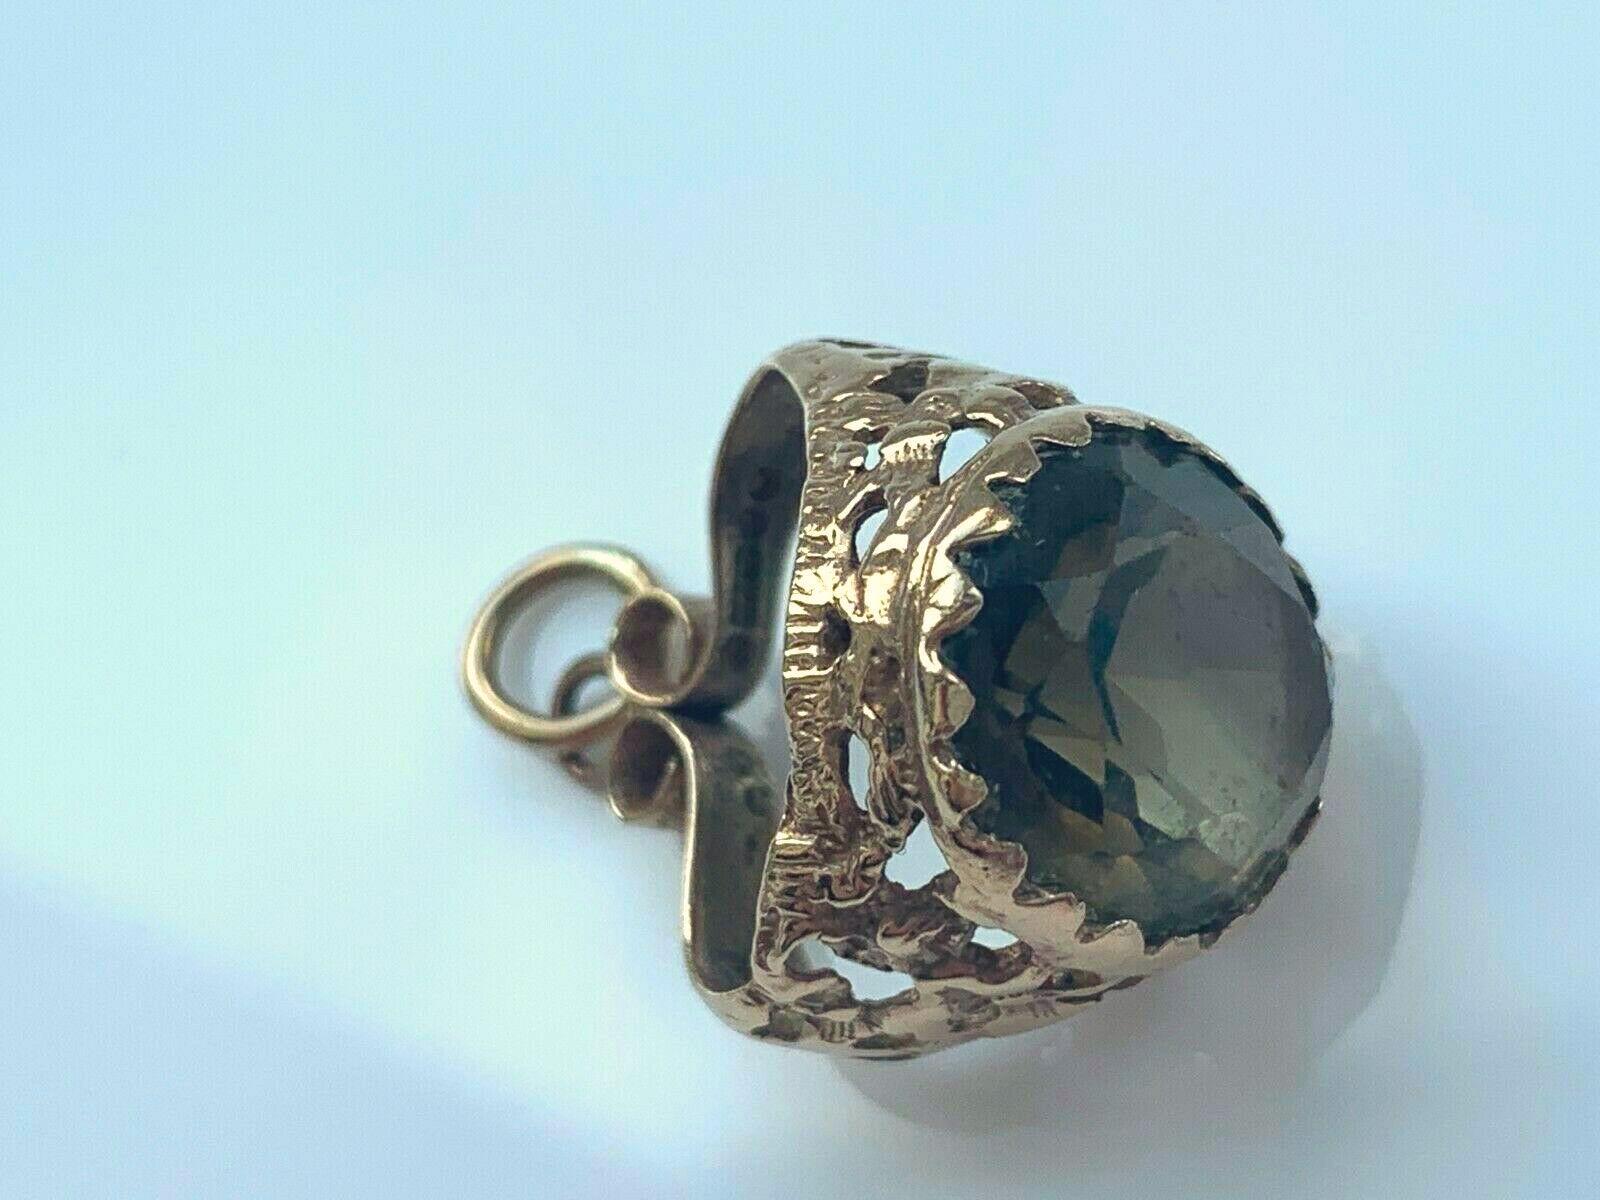 Rare Smoky Quartz Charm
In the shape of a ring 
holding a genuine smoky quartz gem stone
Fully Hallmarked 